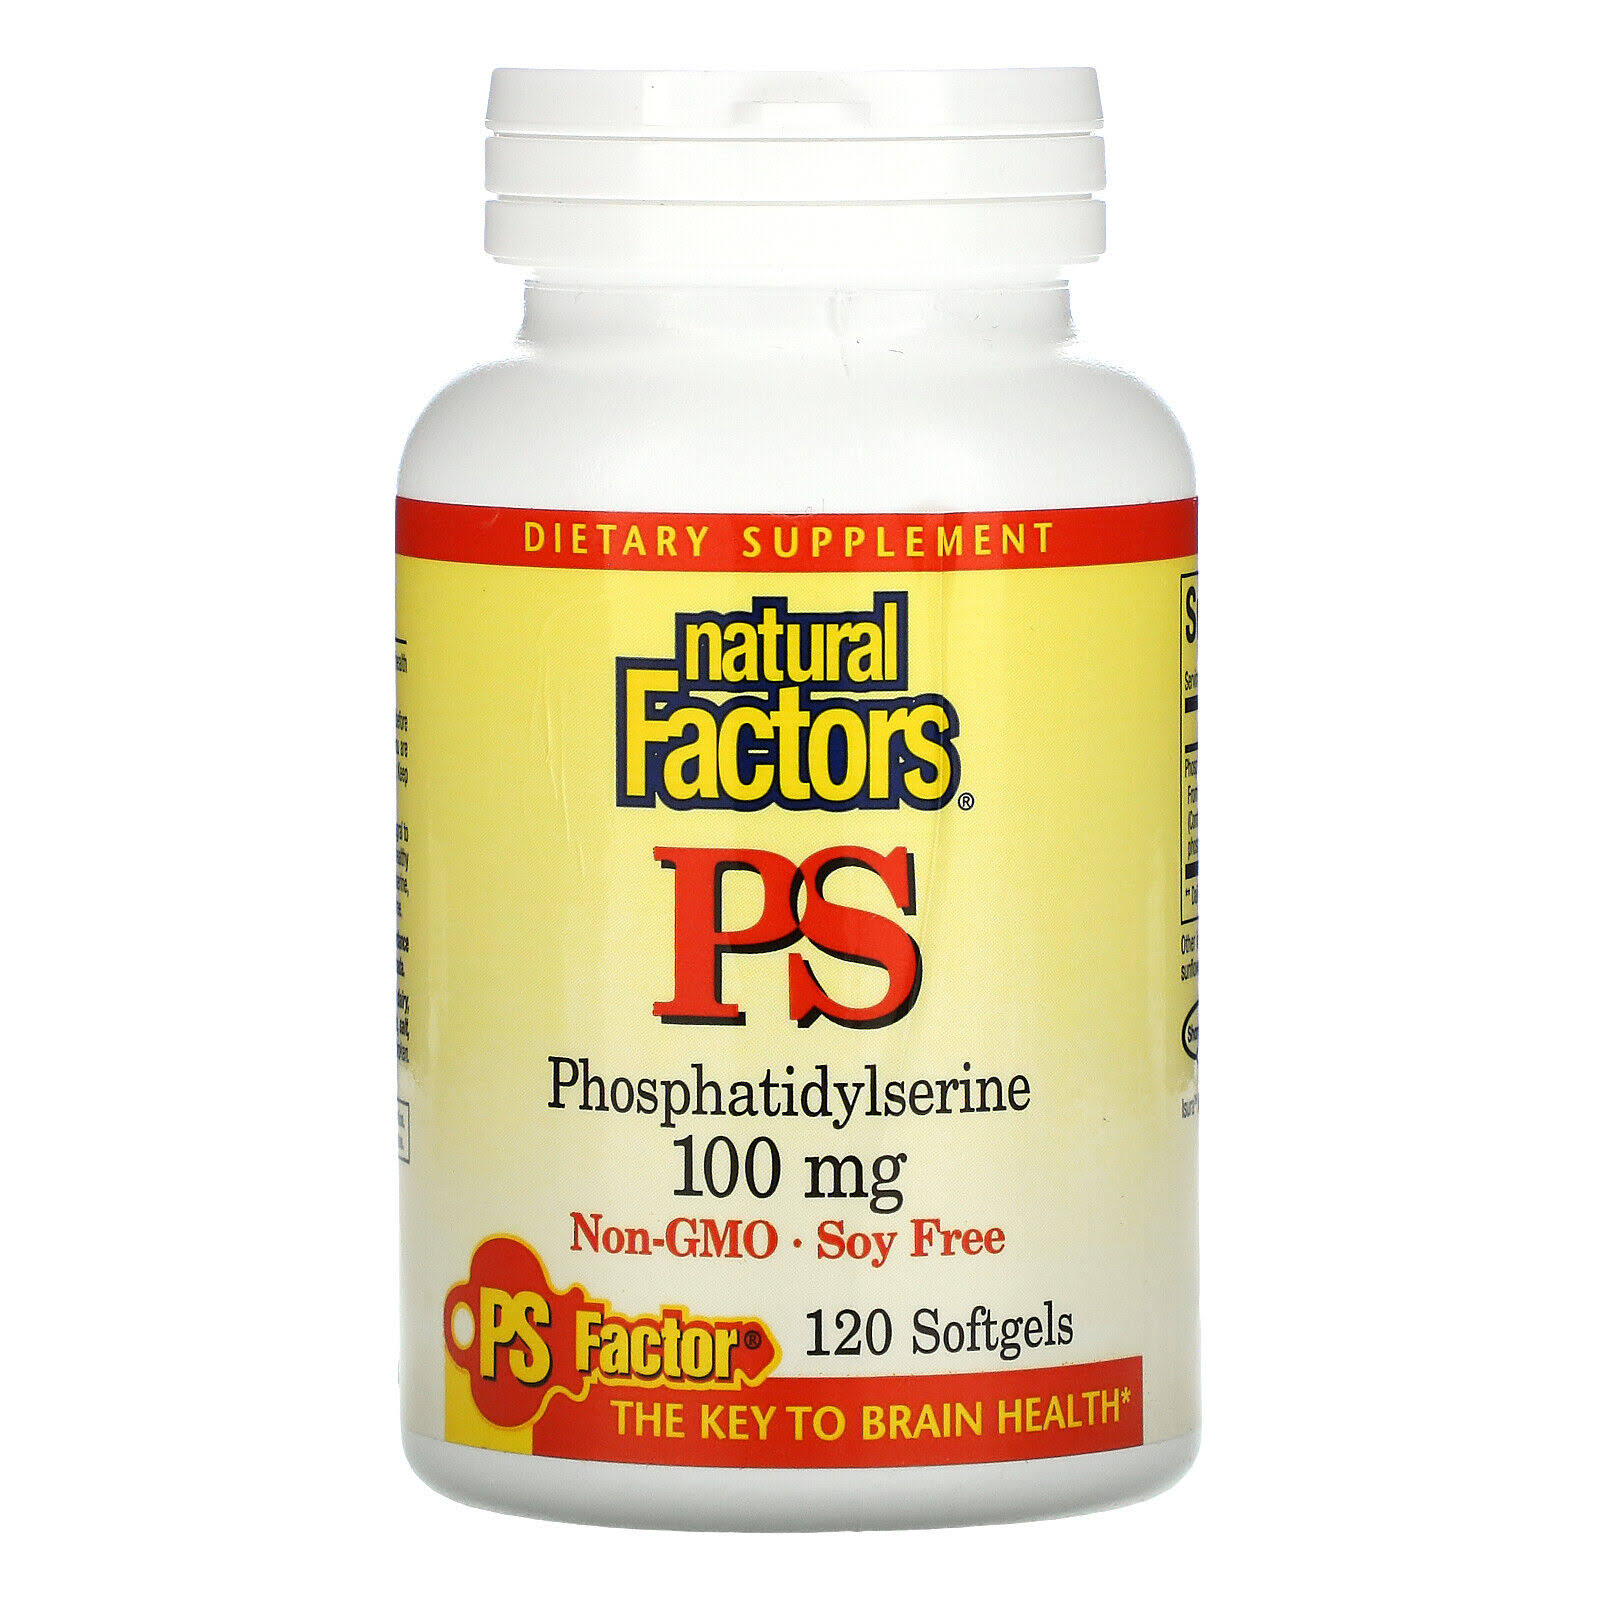 Natural Factors PhosphatidylSerine PS Dietary Supplement - 100mg, 120ct